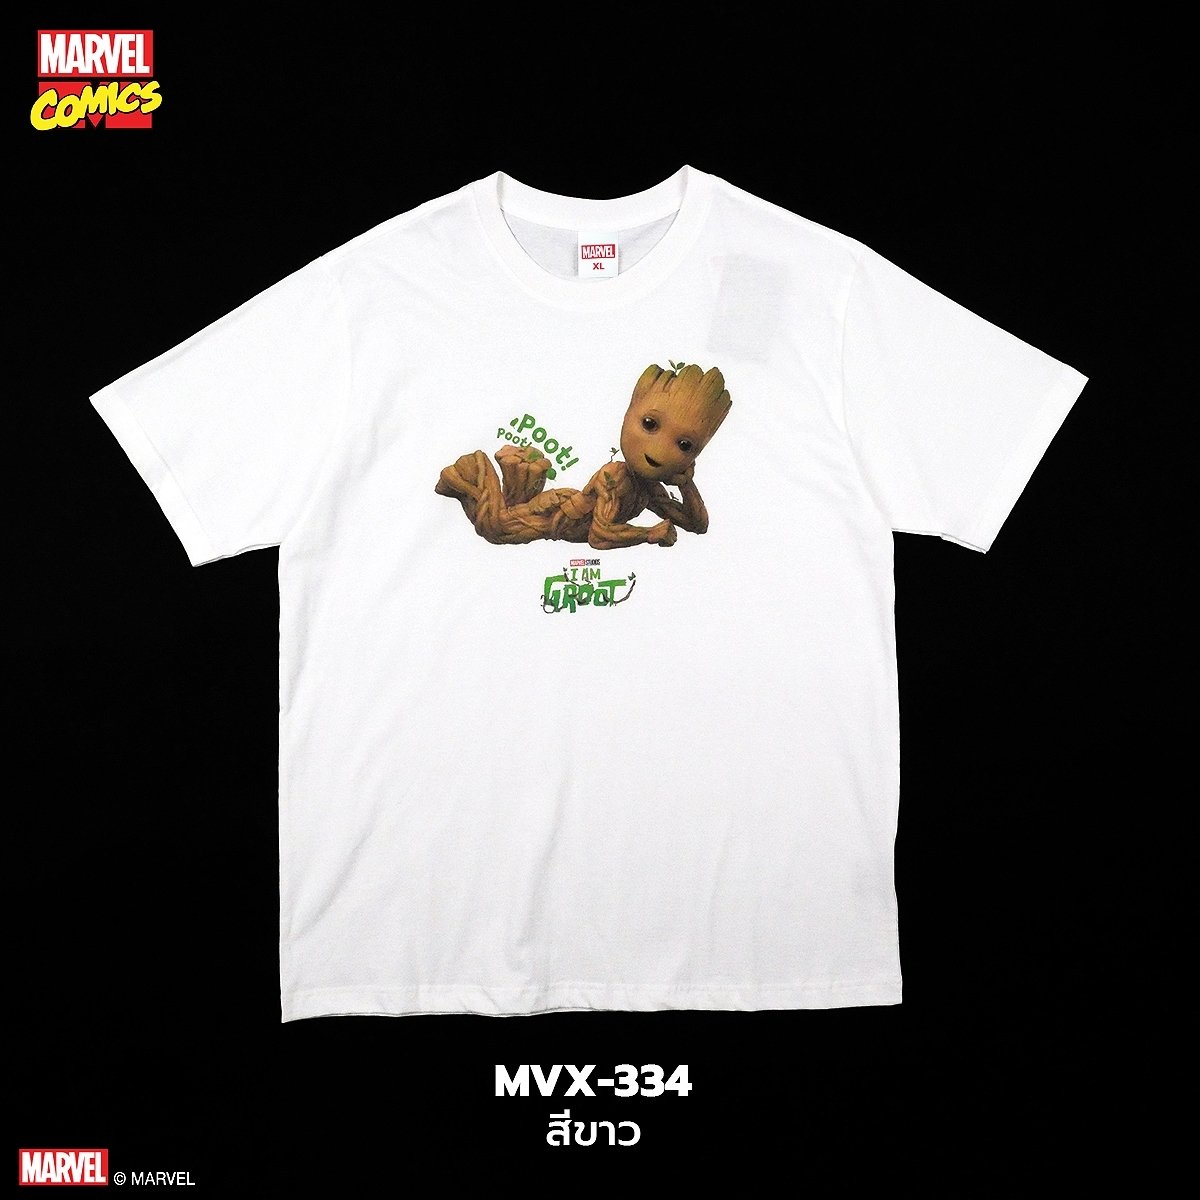 GROOT Marvel Comics T-shirt (MVX-334)